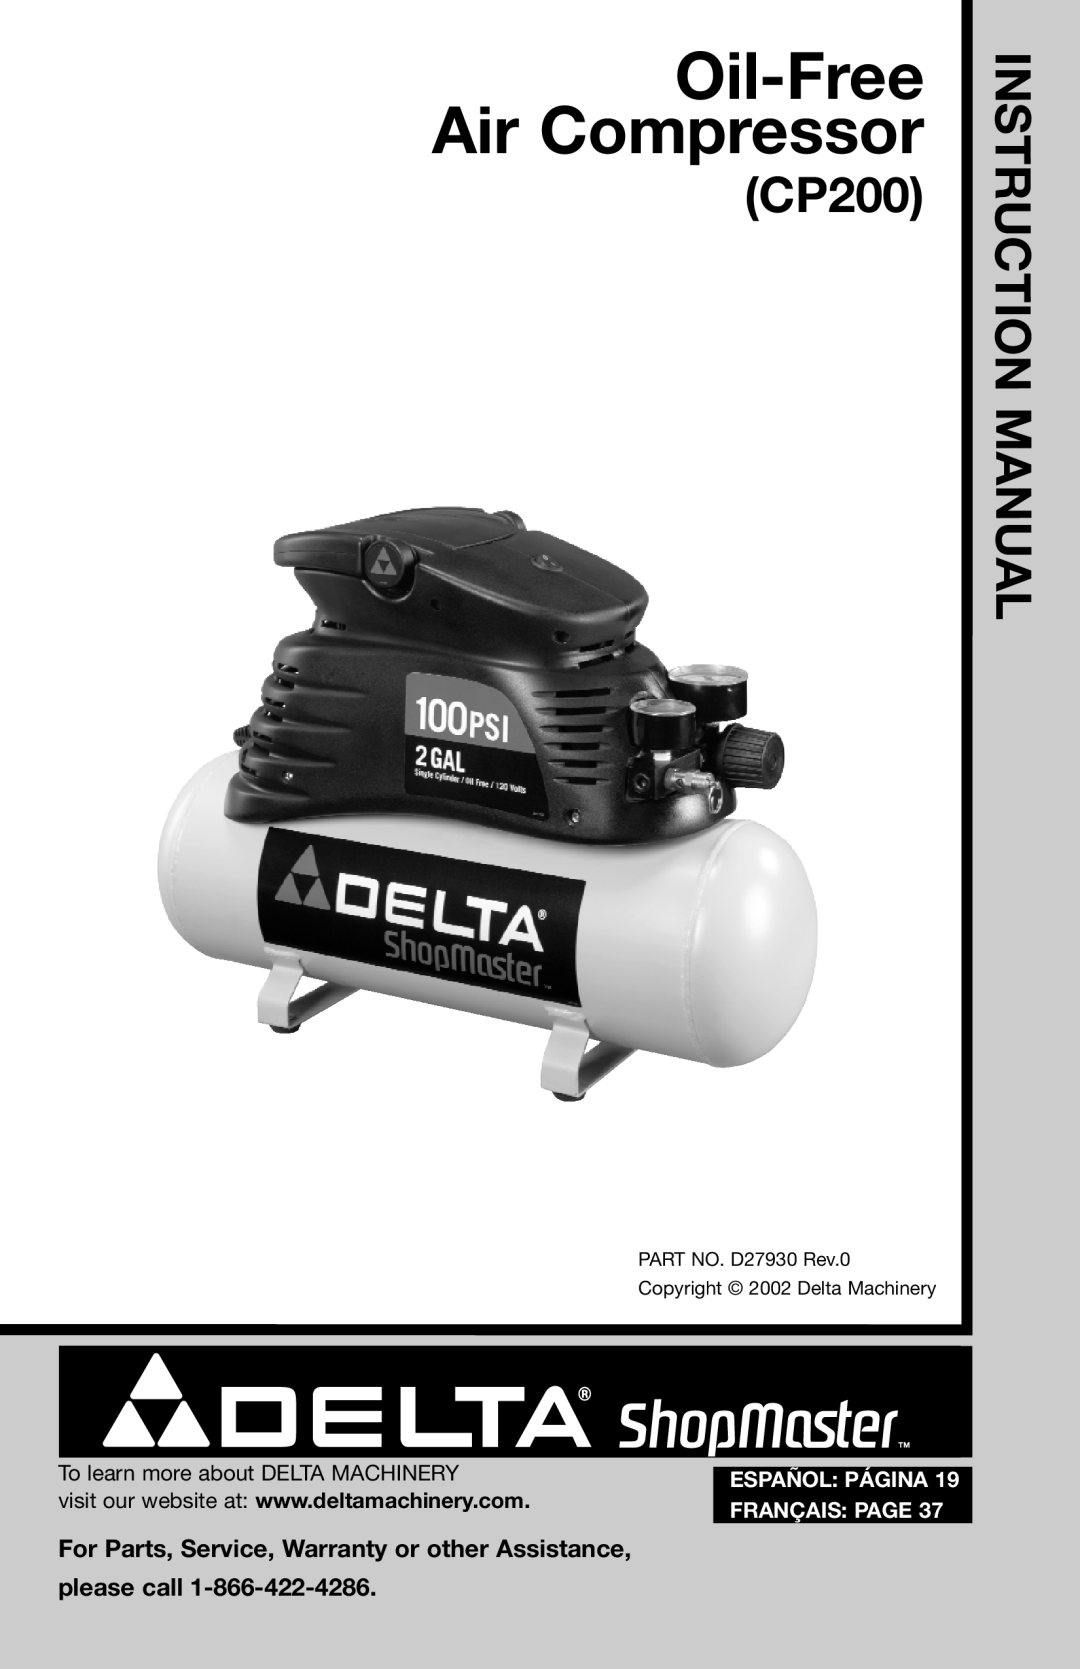 Delta D27930 instruction manual Oil-Free Air Compressor, CP200, Instruction Manual, Español Página, Français Page 